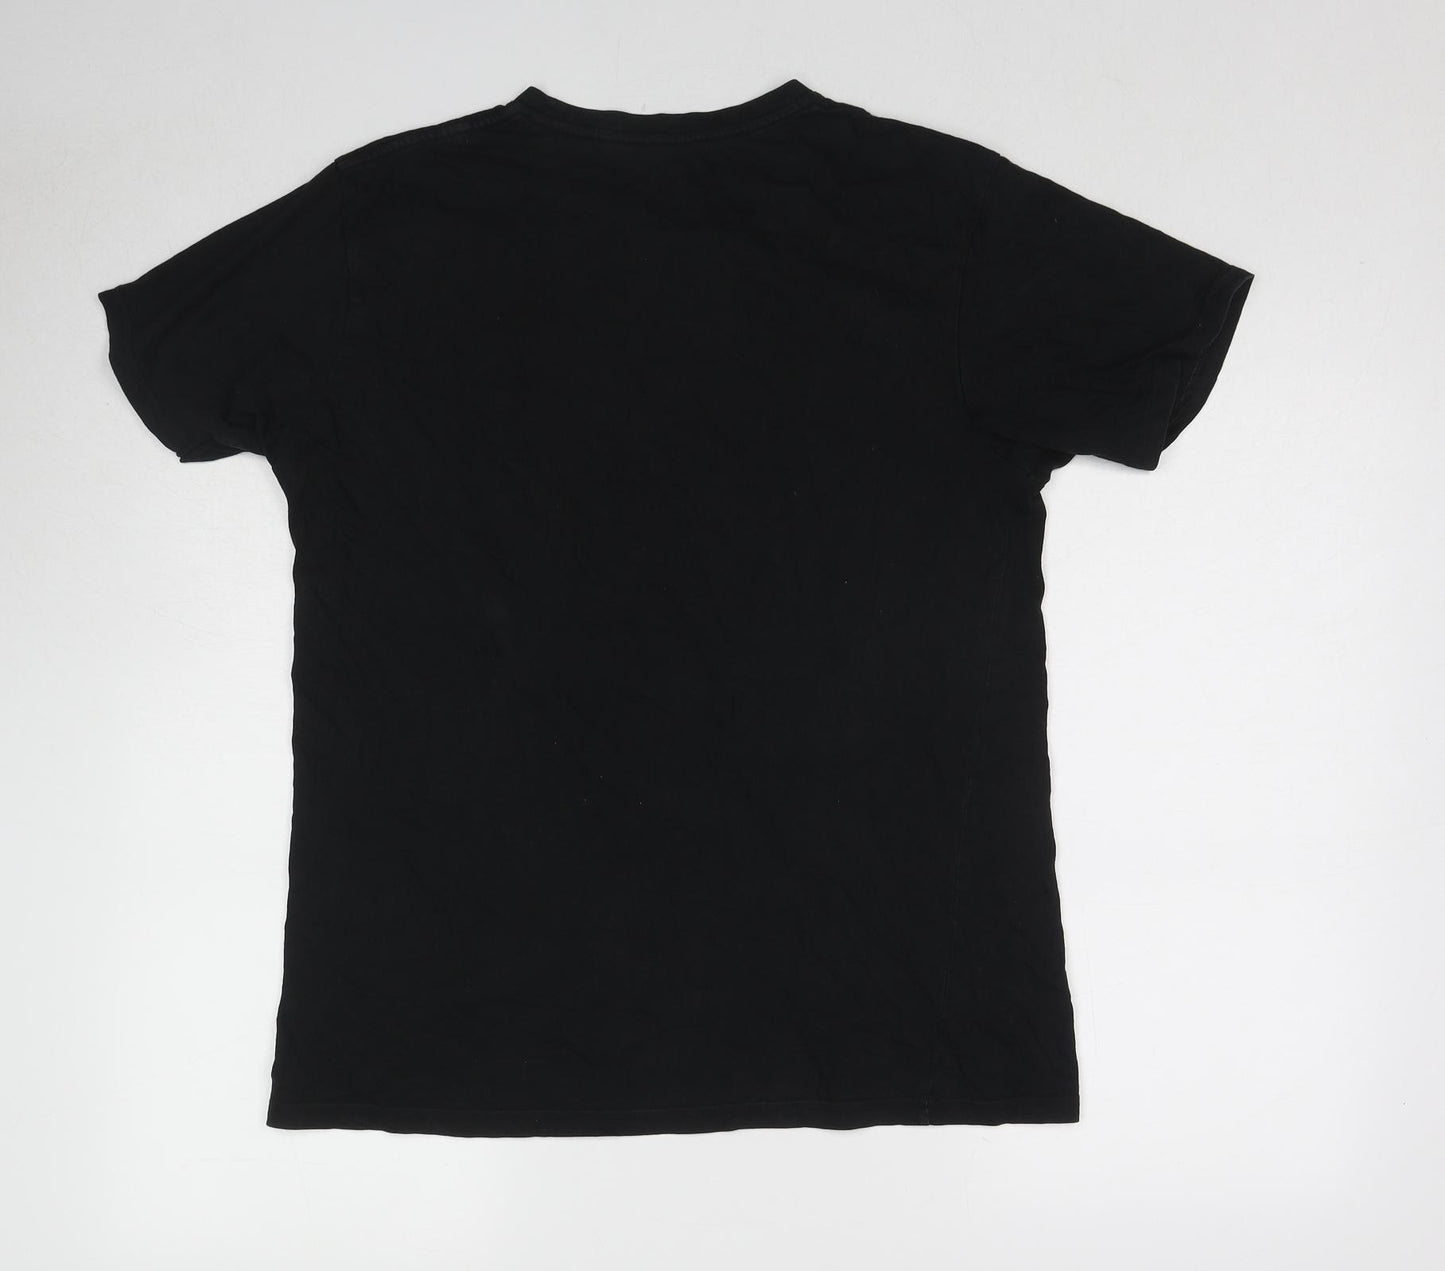 Marks and Spencer Mens Black Cotton T-Shirt Size L Round Neck - Black Sabbath